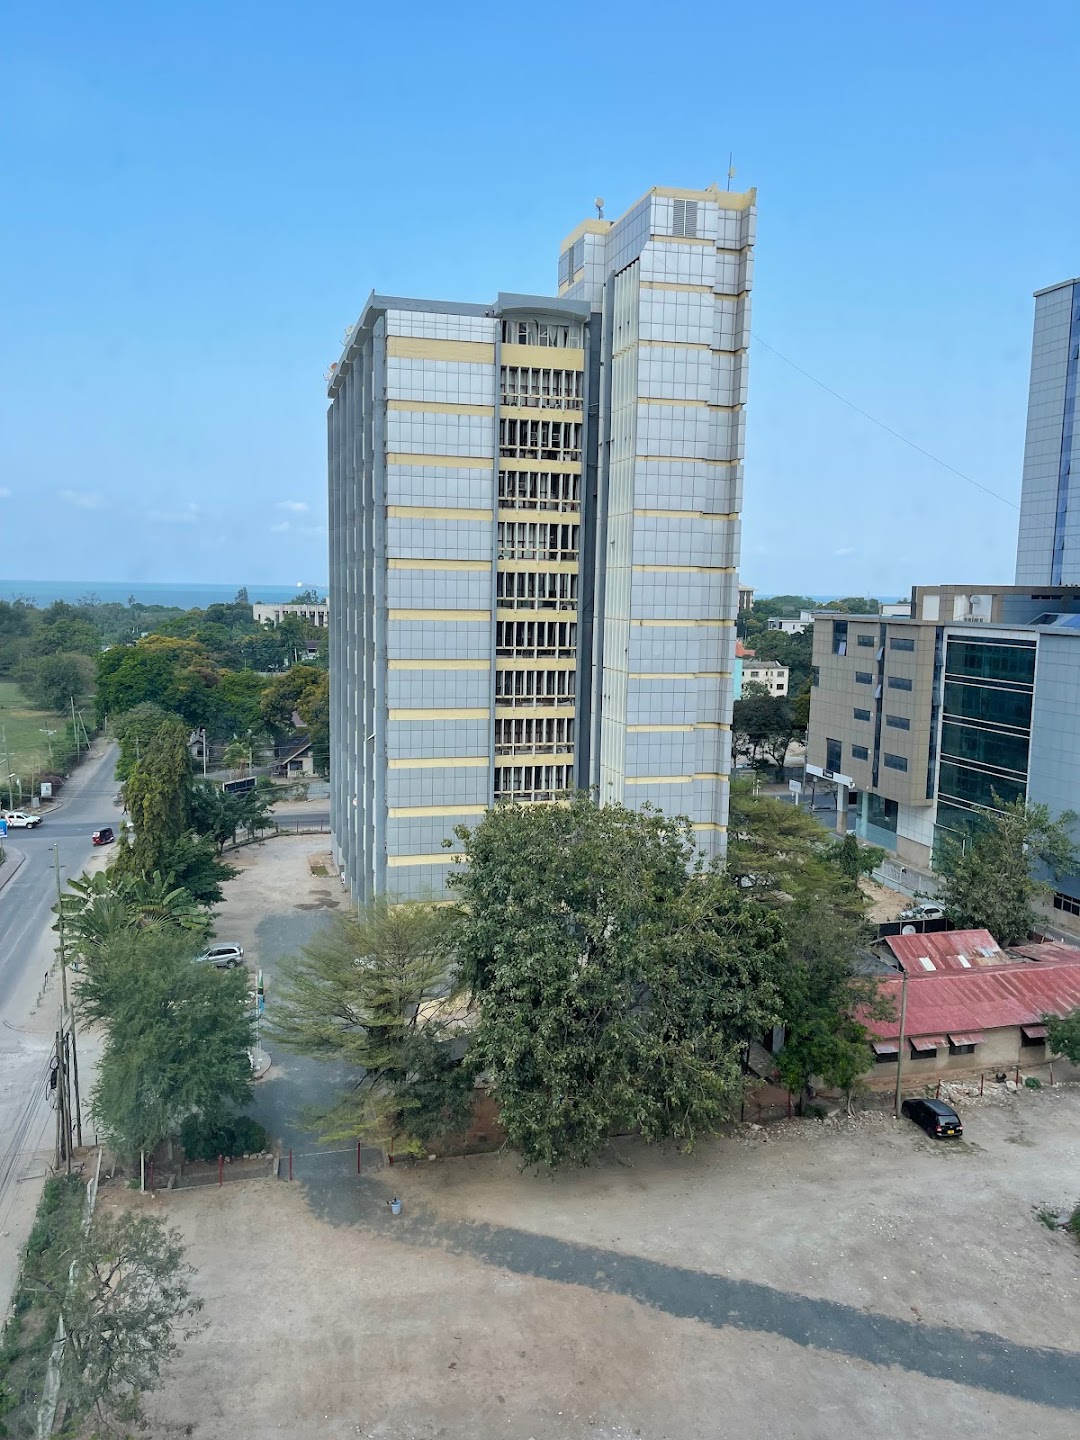 Tanzania Posts Corporation HQ